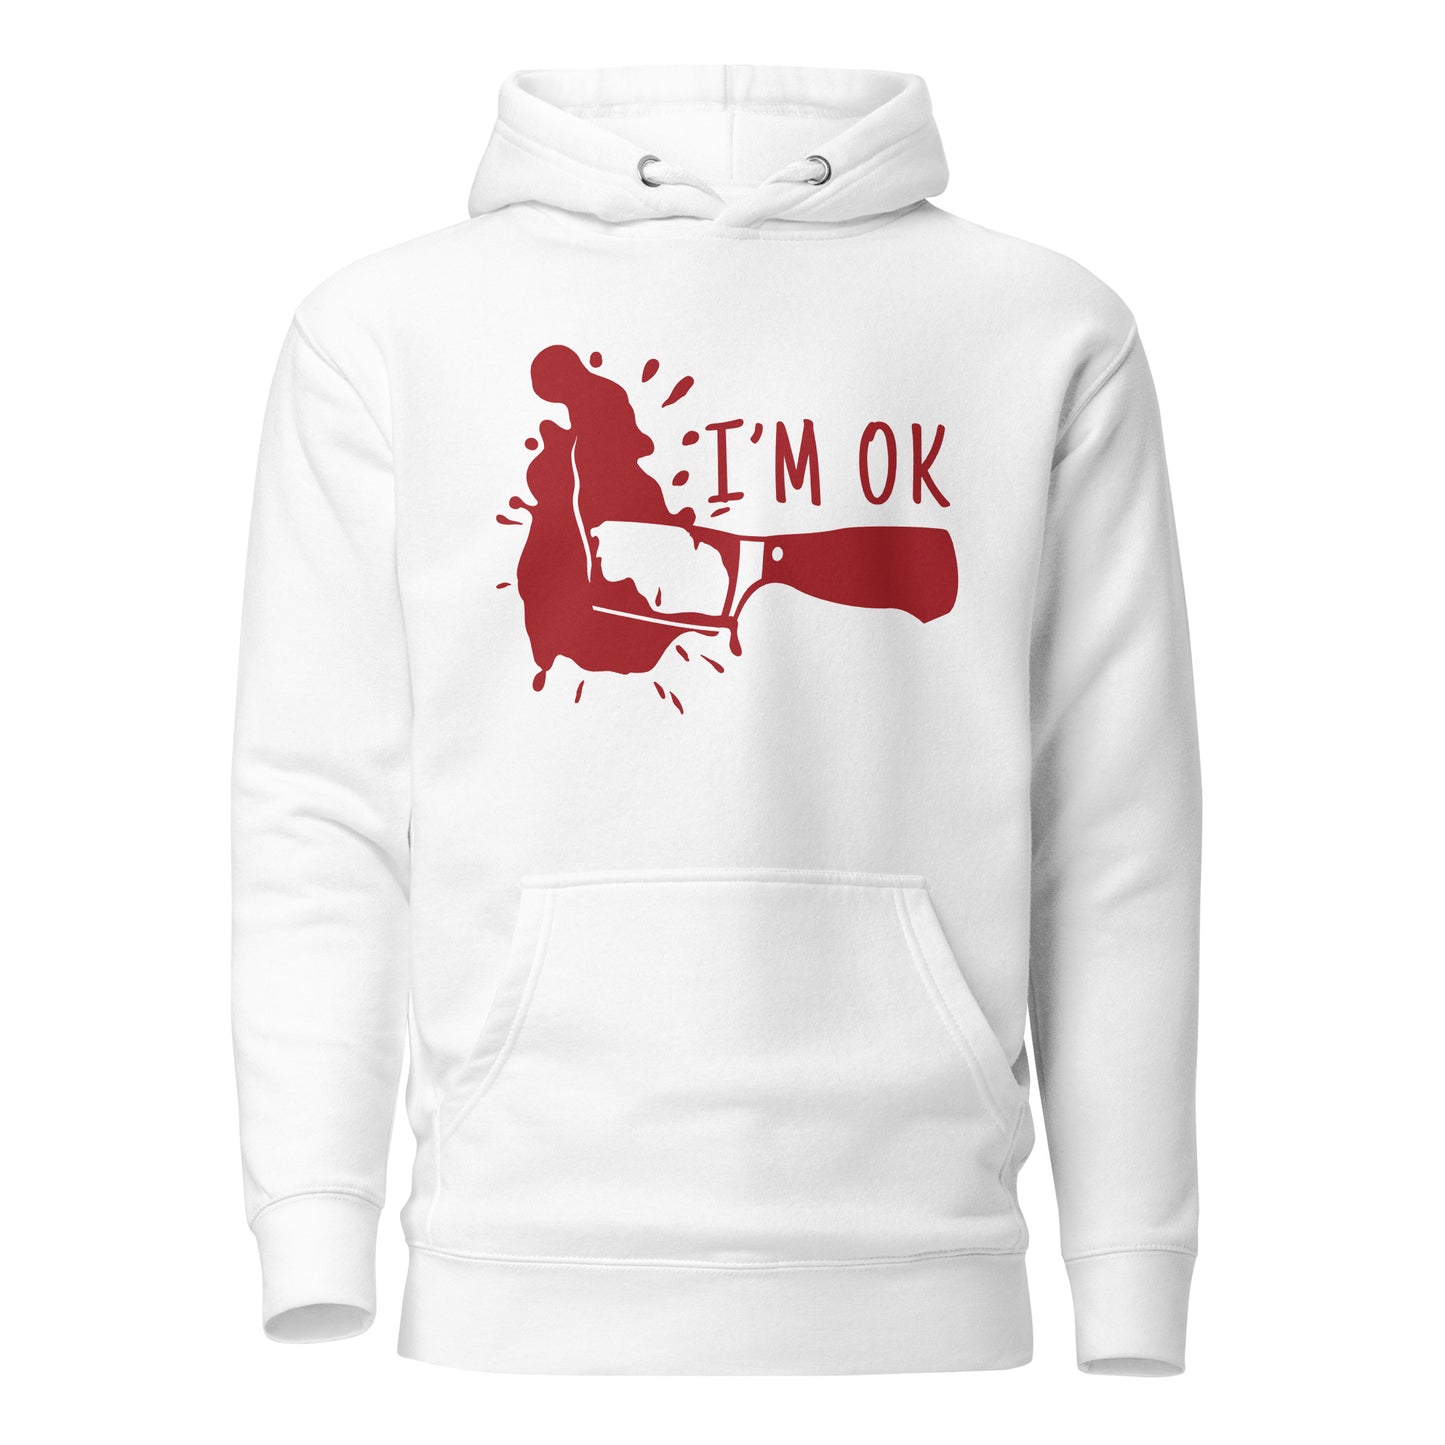 "I'm OK" men's hoodie